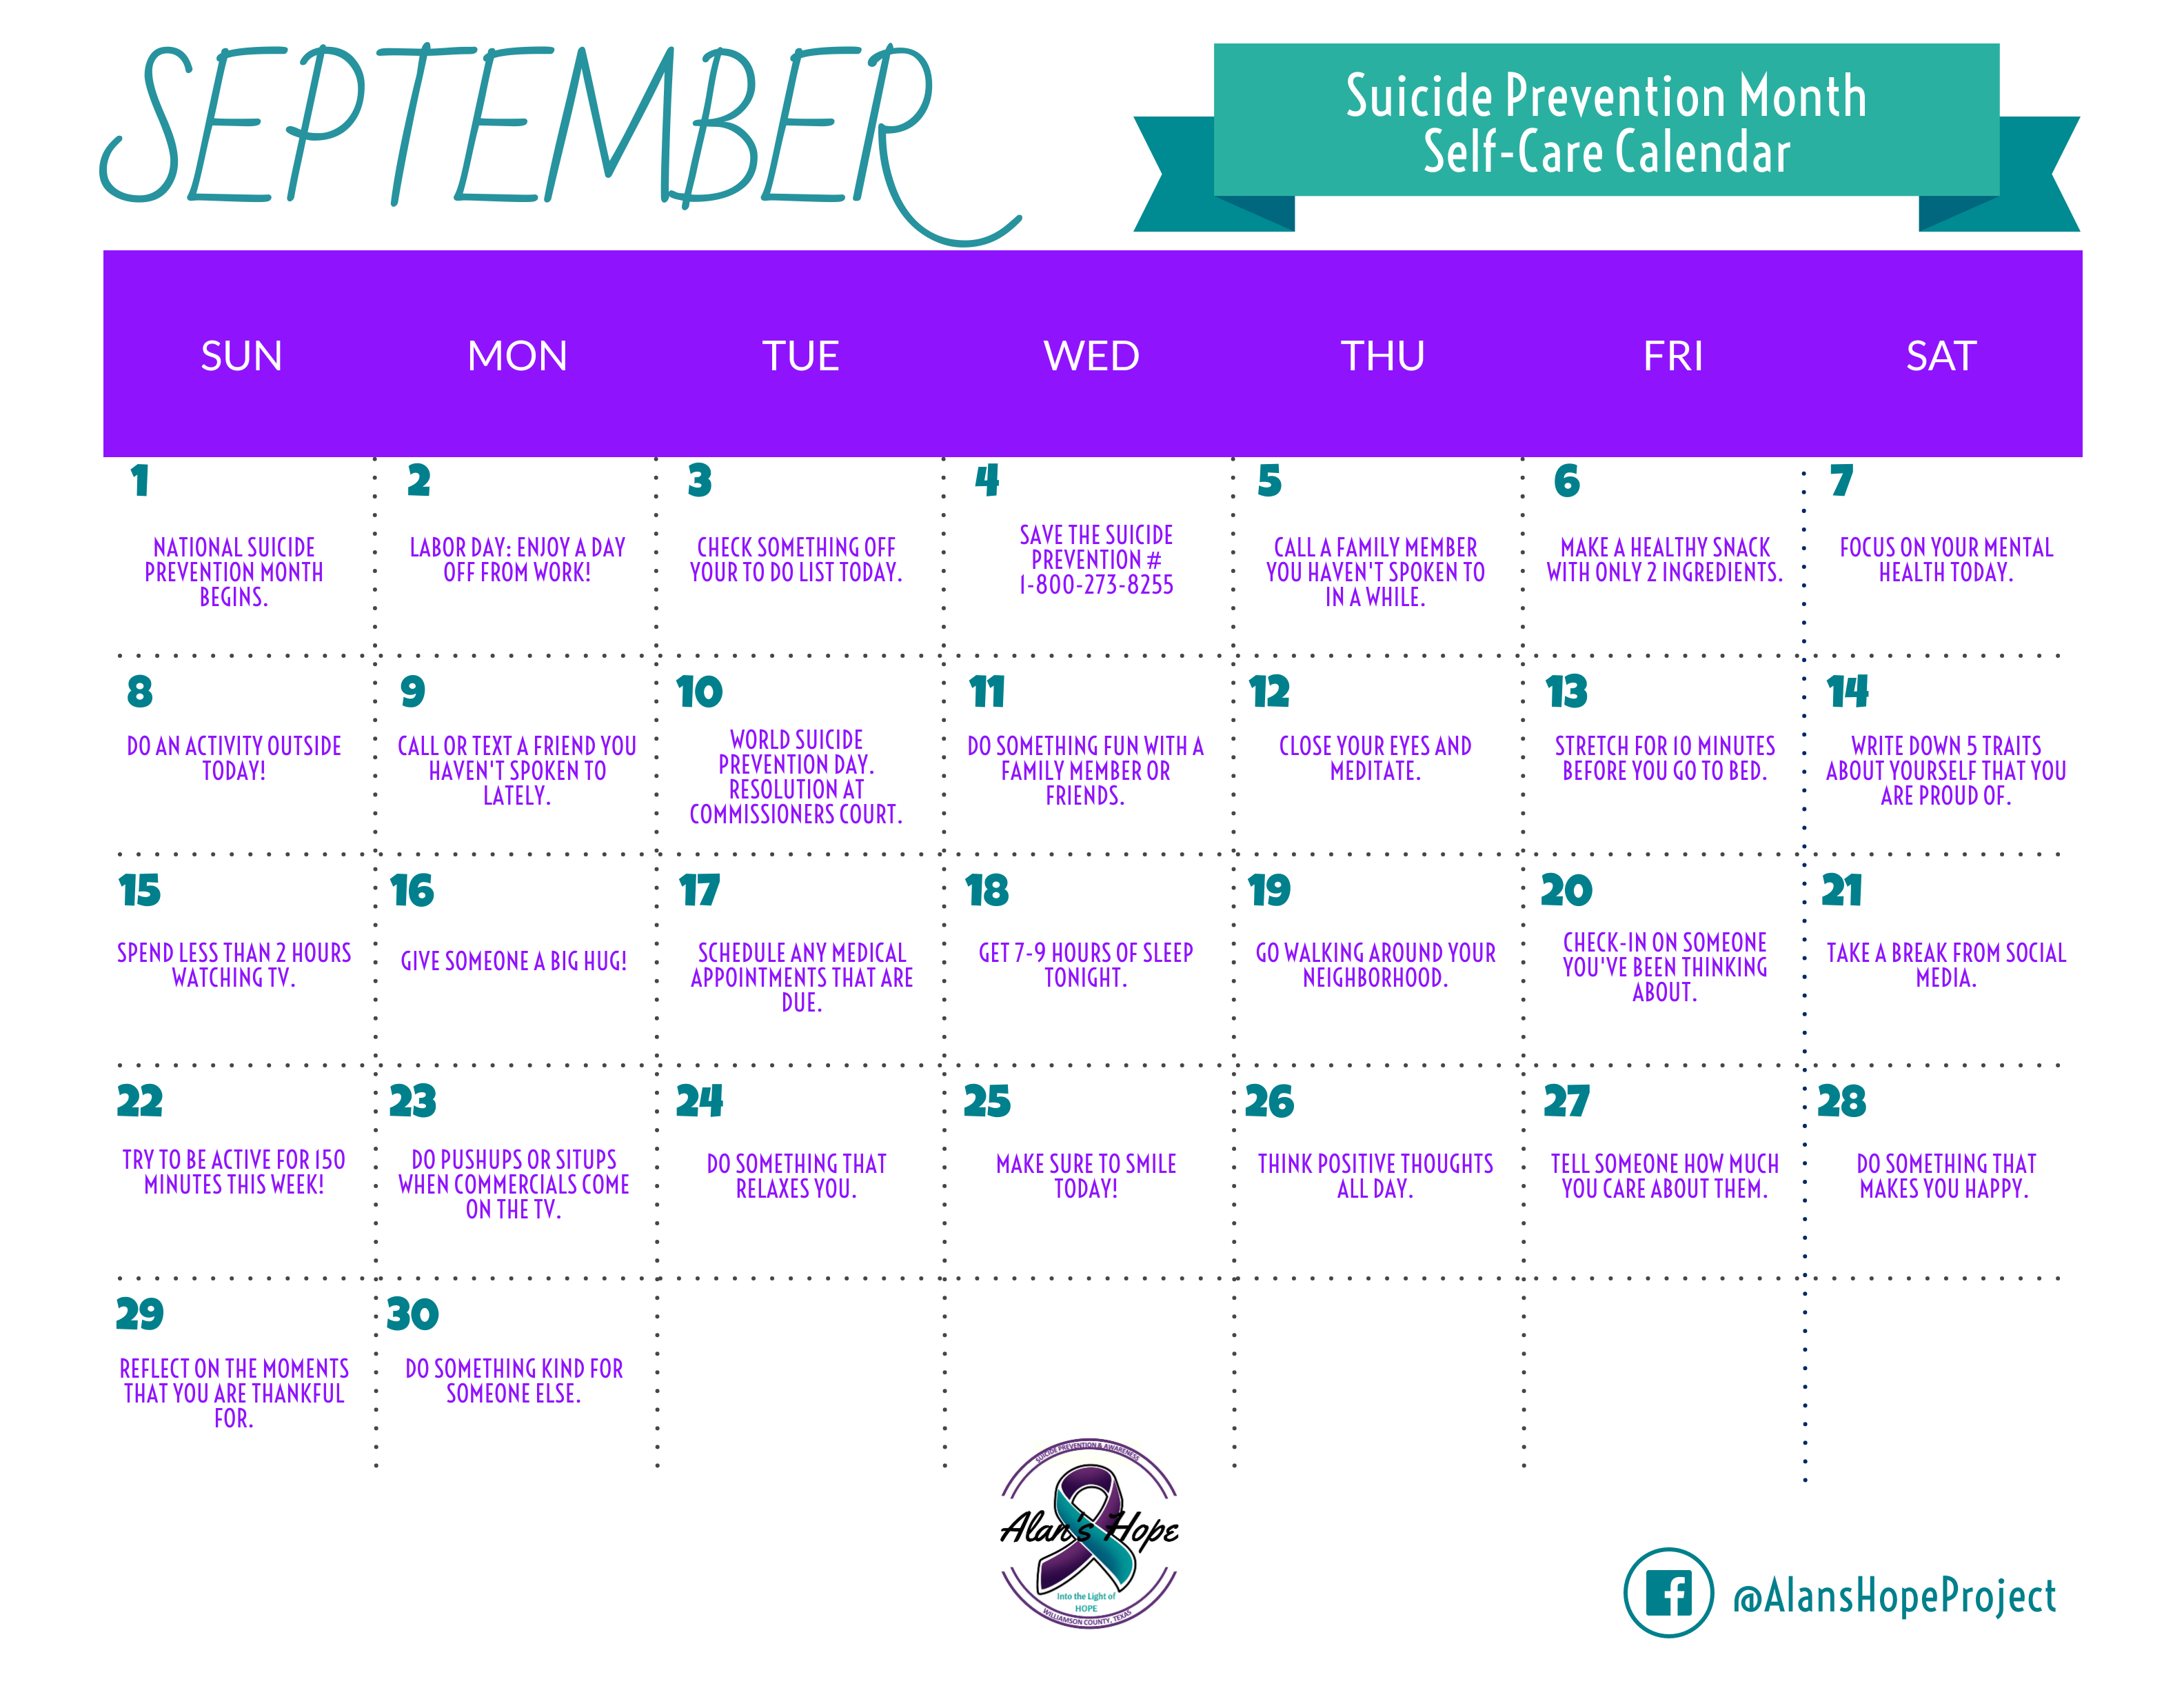 September 2019 suicide prevention month self-care calendar